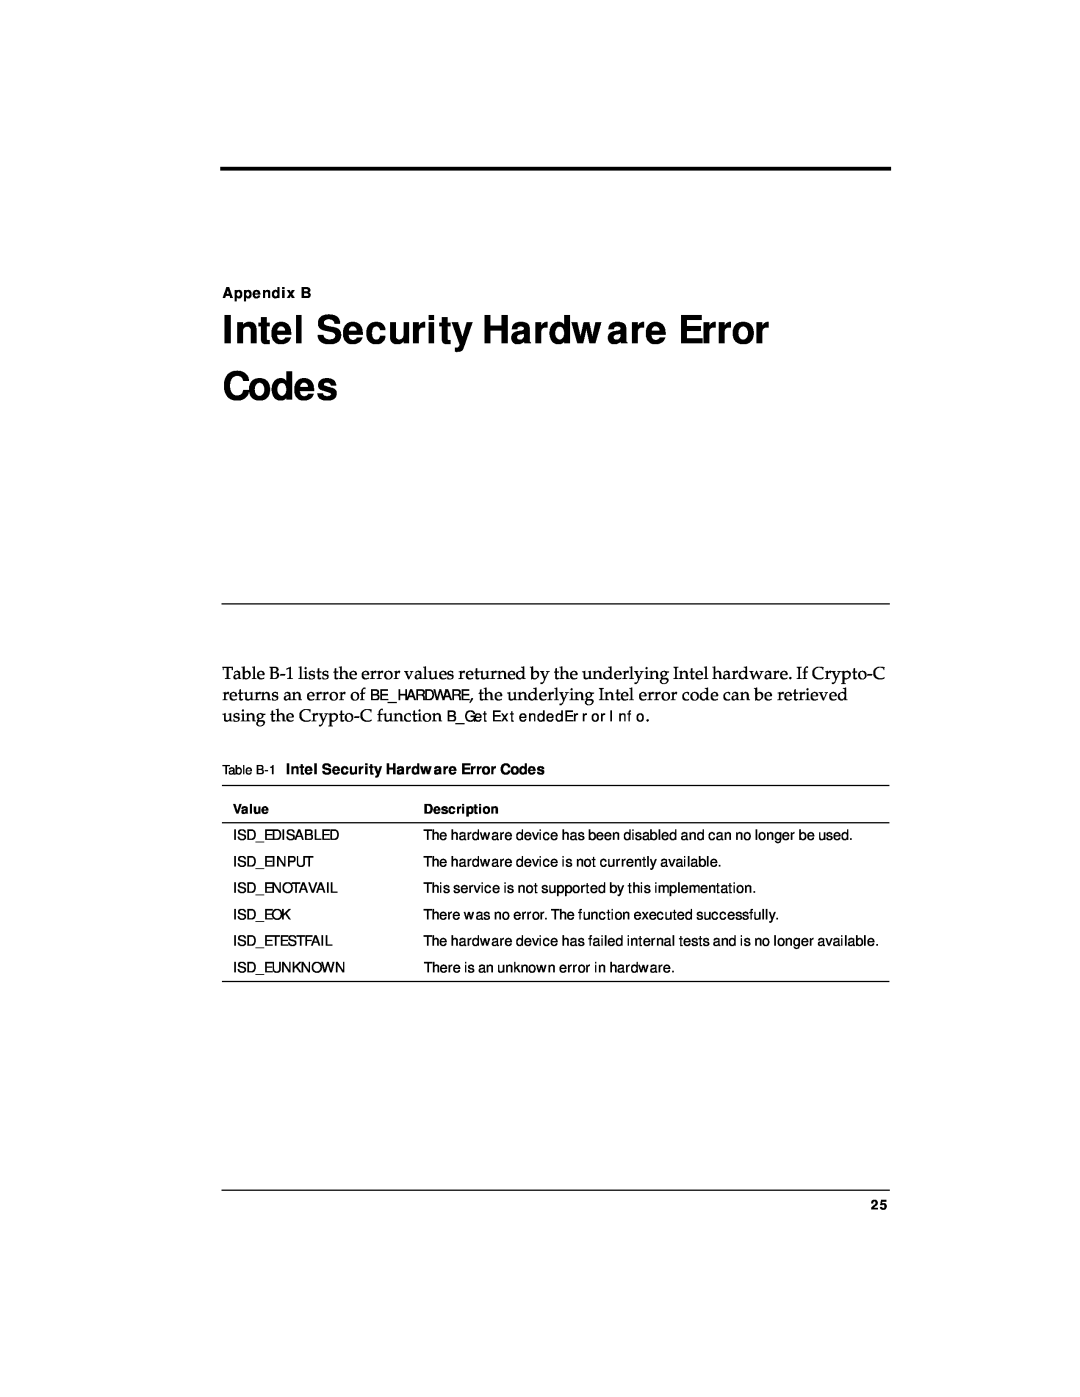 RSA Security 4.3 manual Appendix B, Table B-1 Intel Security Hardware Error Codes 